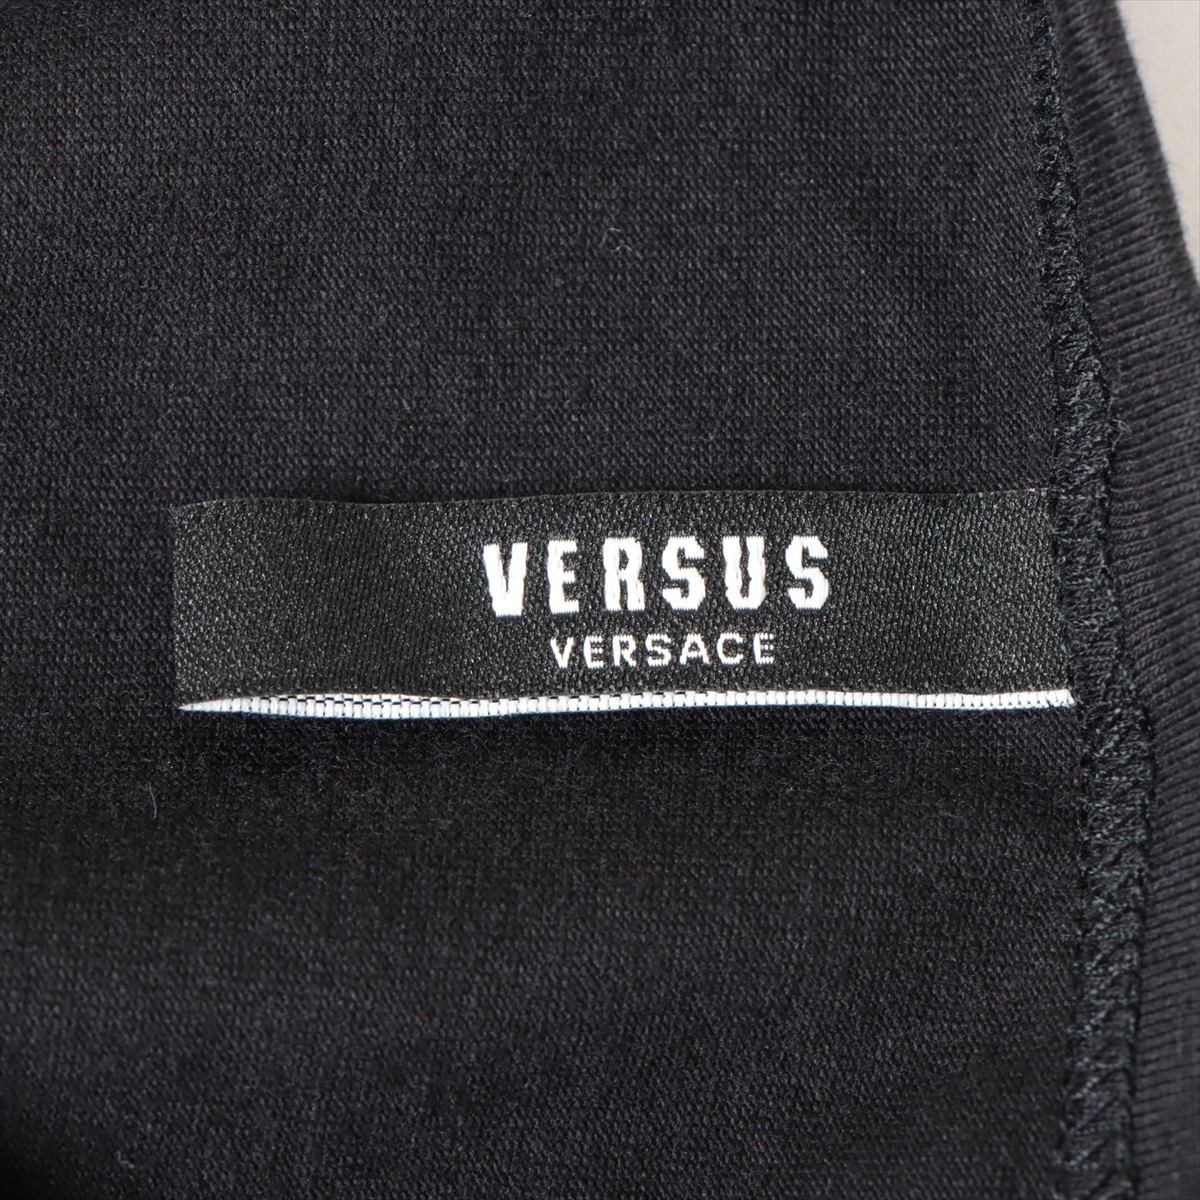 Versus Versace 14 years Cotton & Polyurethane Long T shirts M Men's Black  BU90109